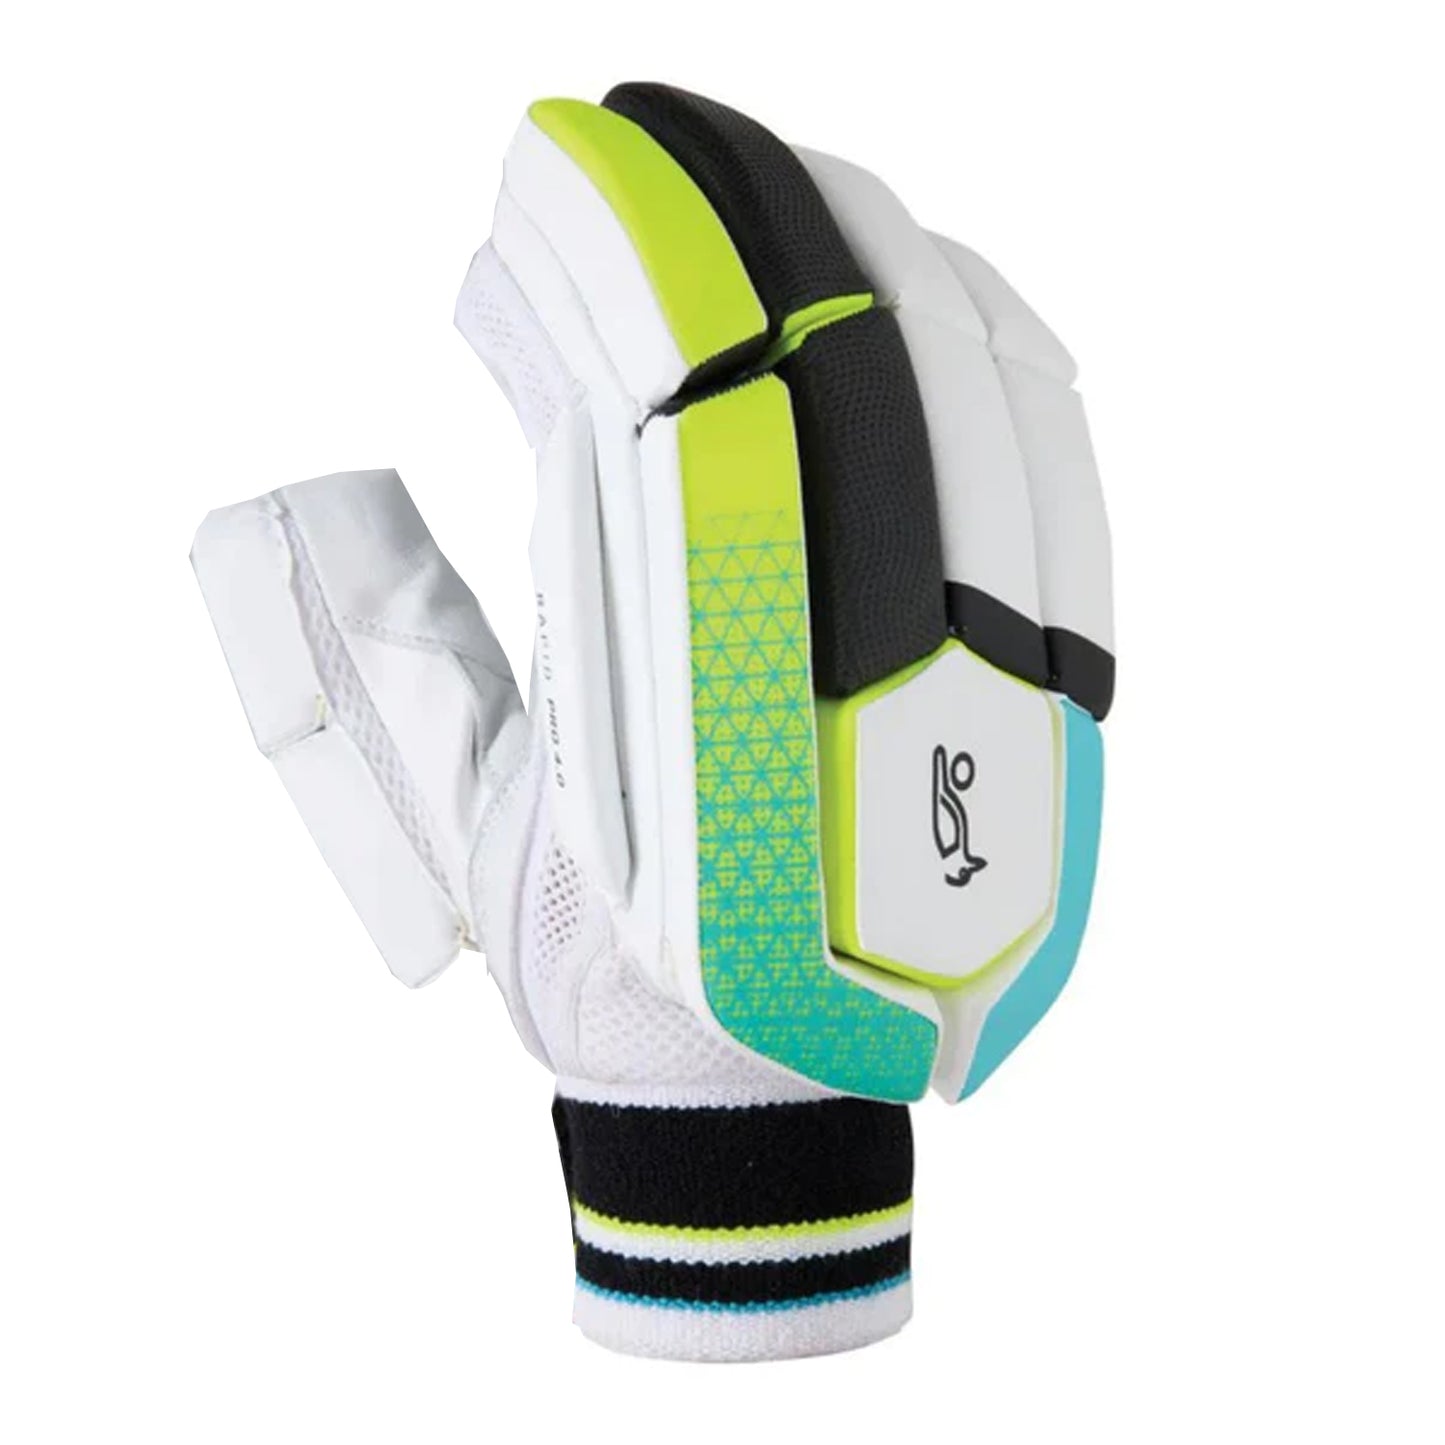 Kookaburra Rapid Pro 4.0 RH Batting Gloves - Best Price online Prokicksports.com